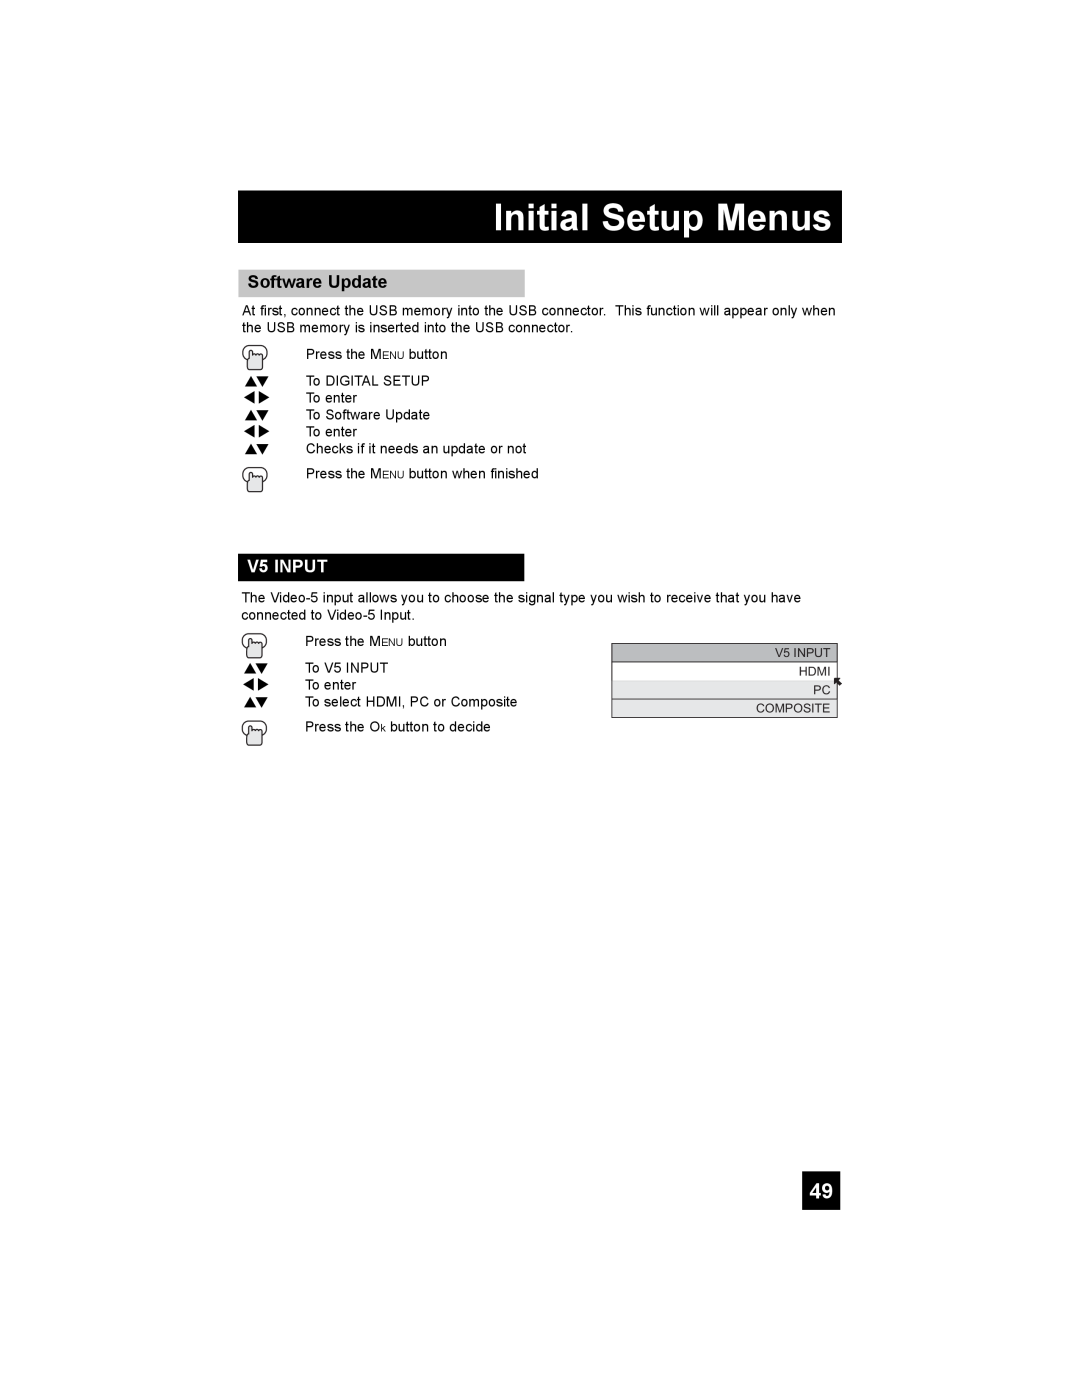 JVC LT-37X898, LT-42X898 manual Software Update, V5 INPUT, Initial Setup Menus 